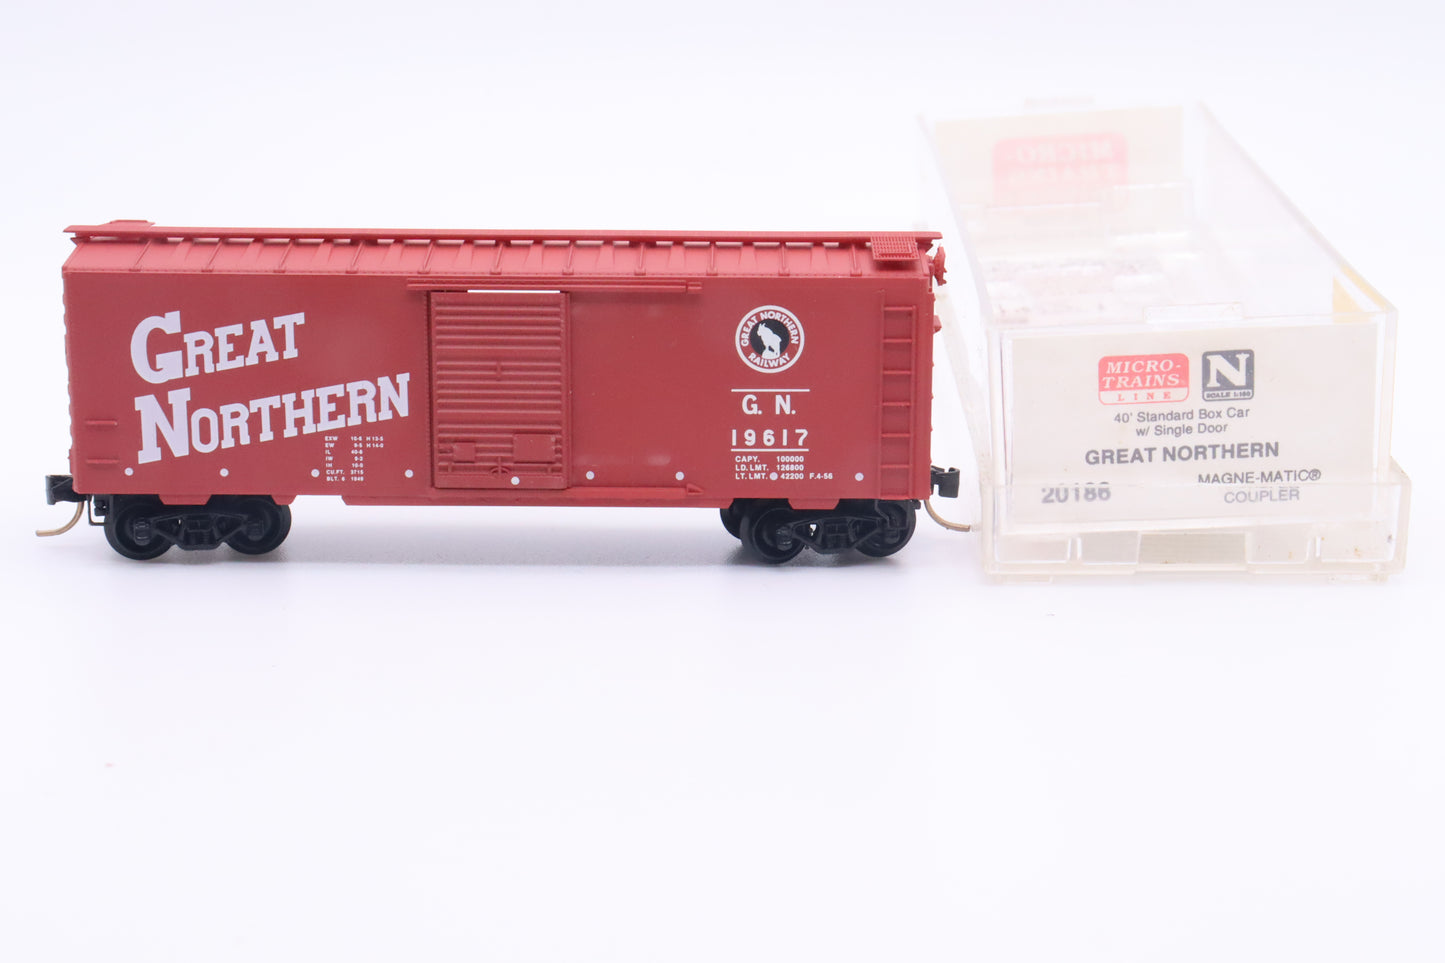 MTL-20186 - 40' Standard Box Car w/ Single Door - Great Northern - GN-19617